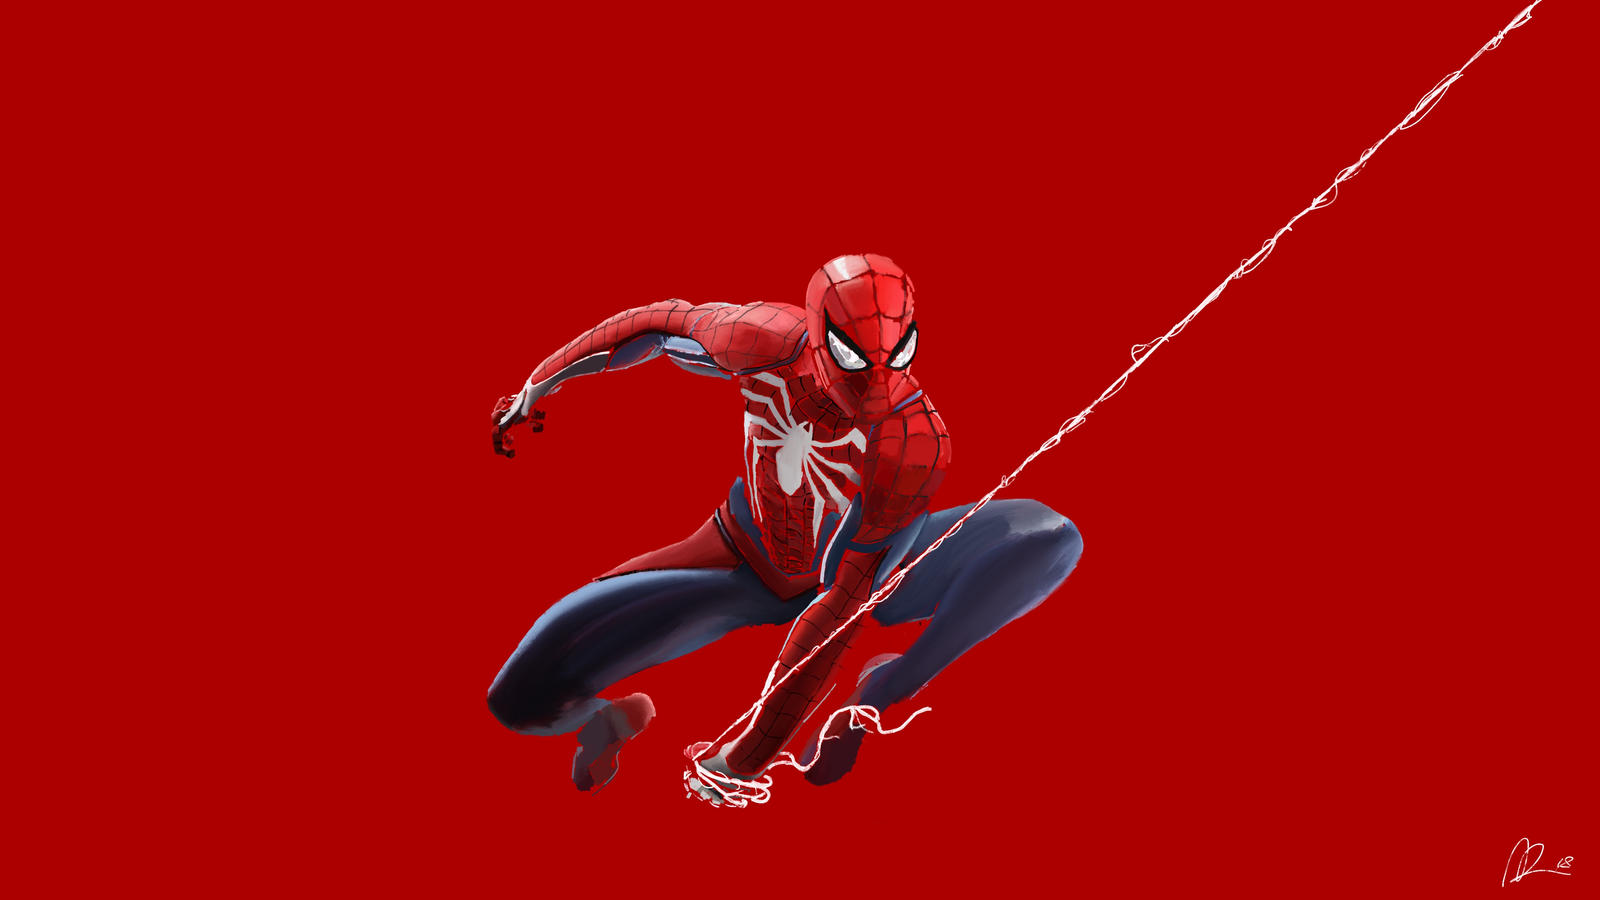 Spiderman PS4 4K Wallpaper by UtopiaOfInk on DeviantArt